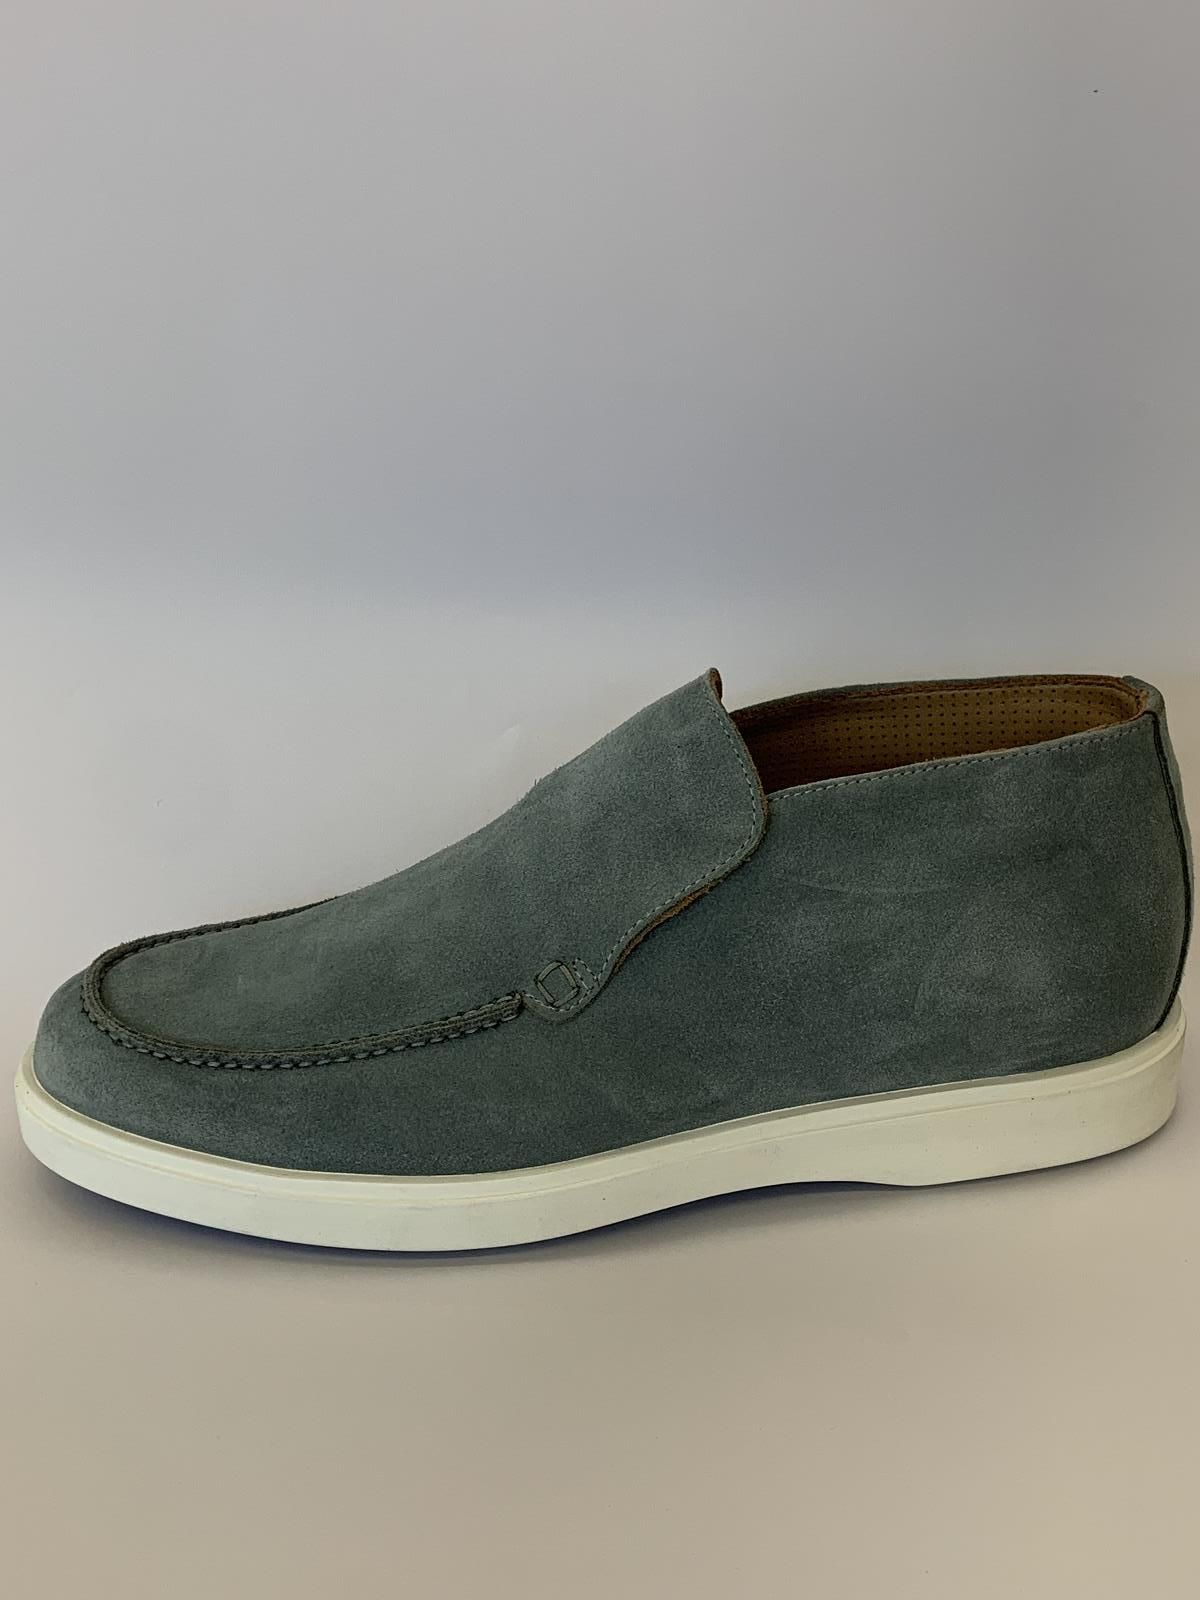 Giorgio Sneaker Blauw heren (Loafer Lichtblauw Suede - 2875807) - Schoenen Luca